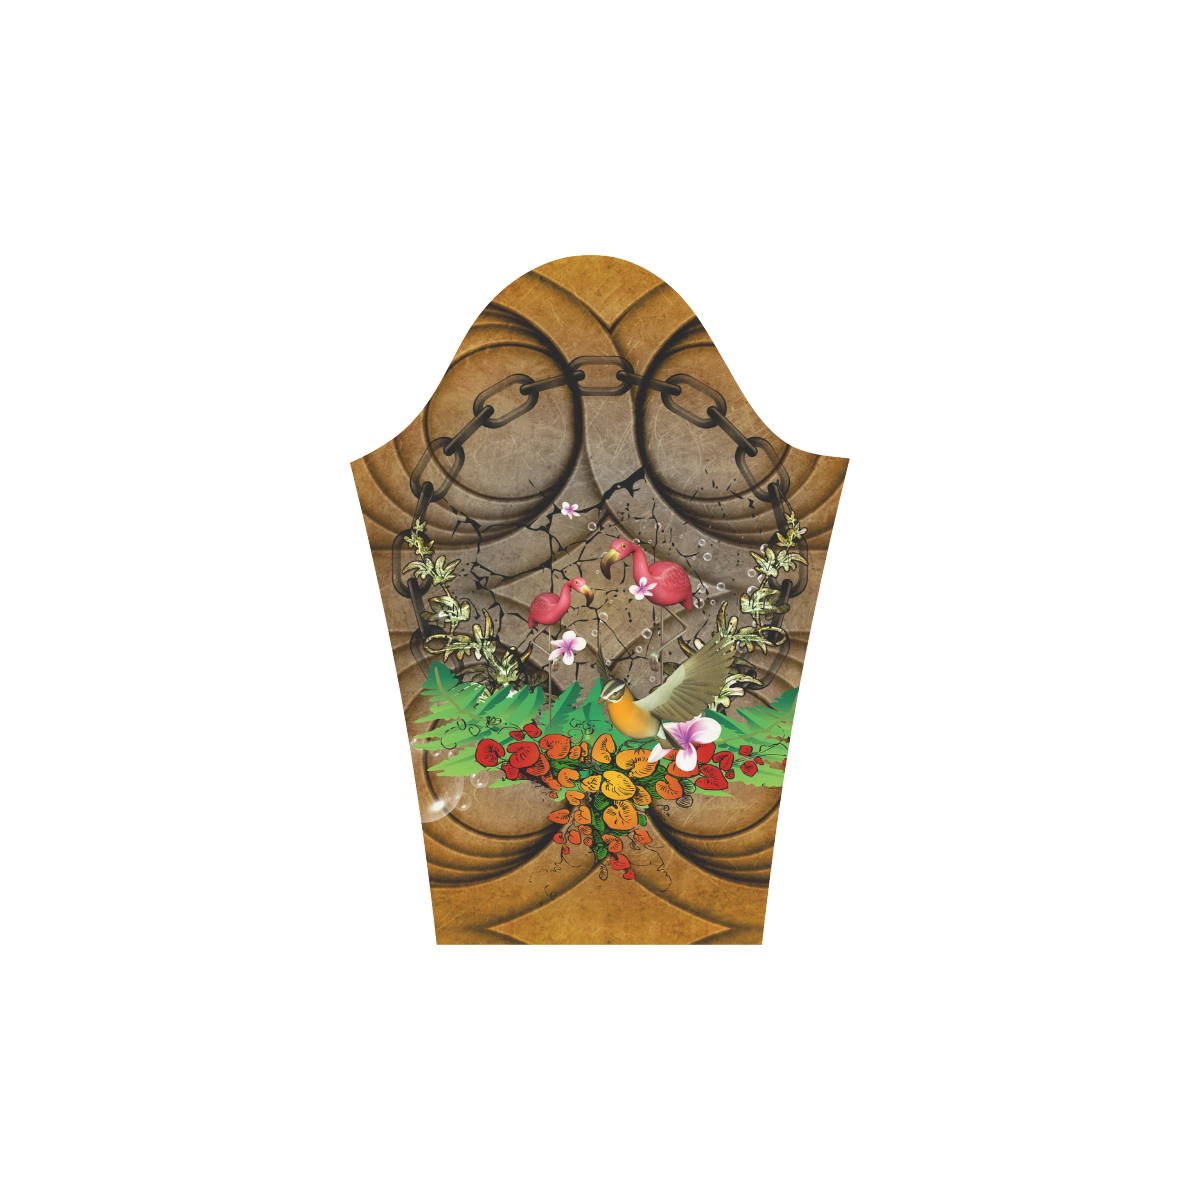 Wonderful tropical design Rhea Loose Round Neck Dress(Model D22)